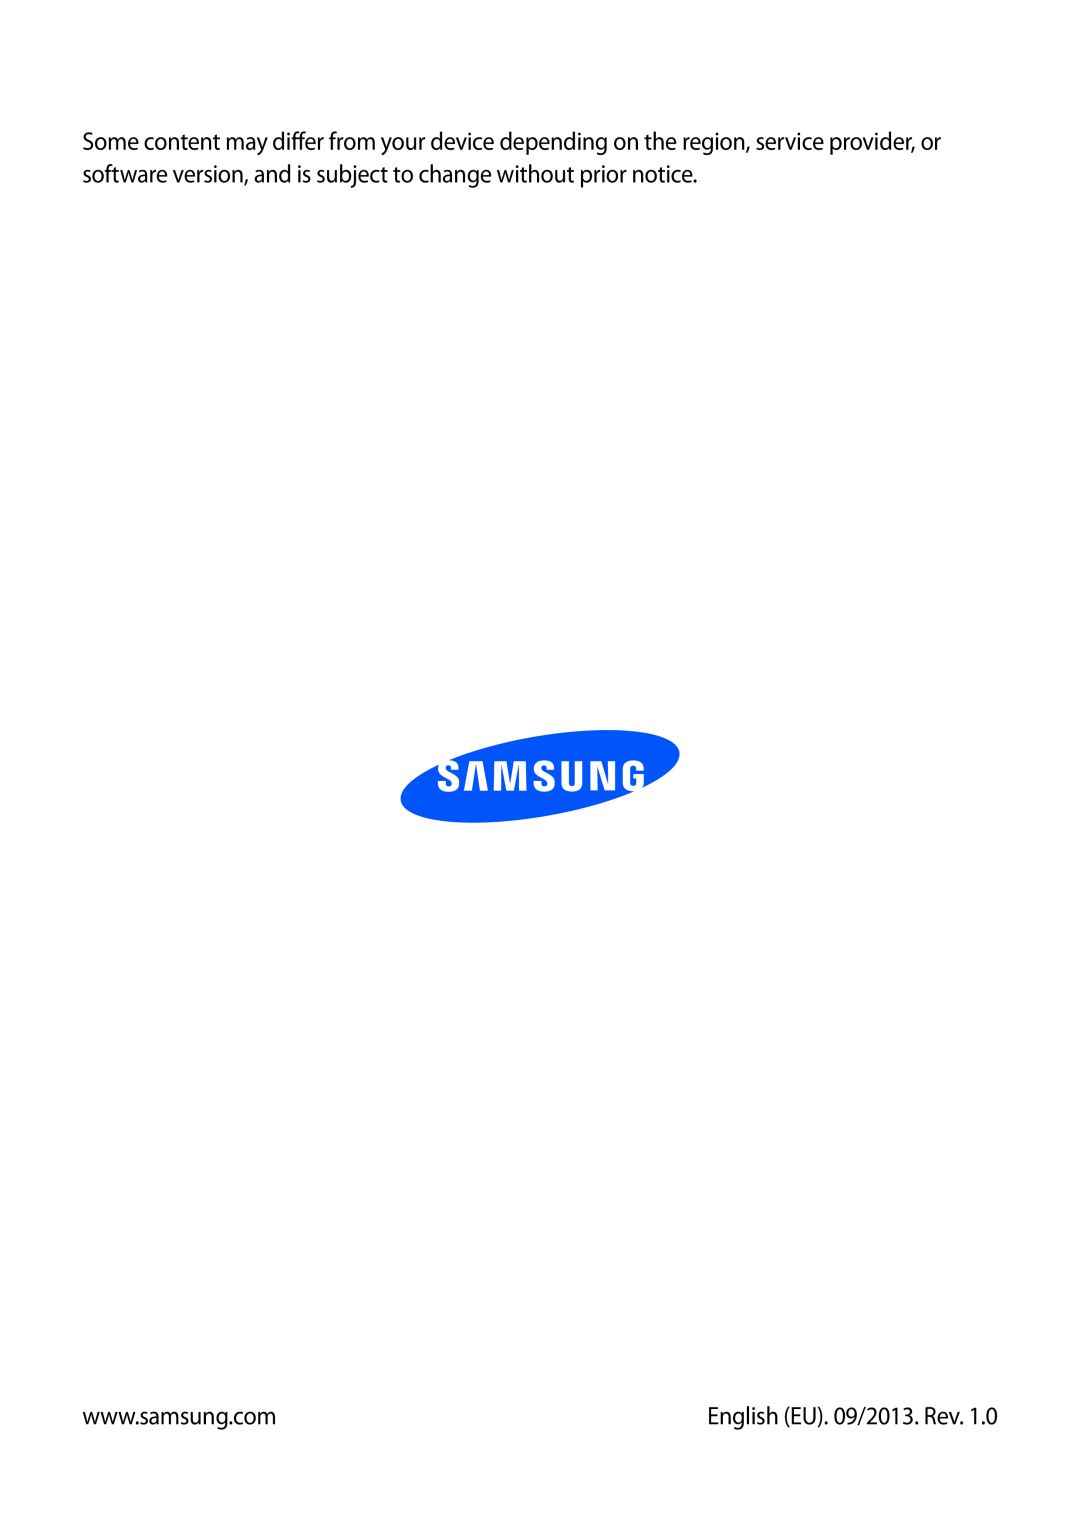 Samsung GT-S6790ZWYSEB, GT-S6790PWNTPH, GT-S6790MKNDBT, GT-S6790PWNDBT, GT-S6790PWNSEB manual English EU. 09/2013. Rev 